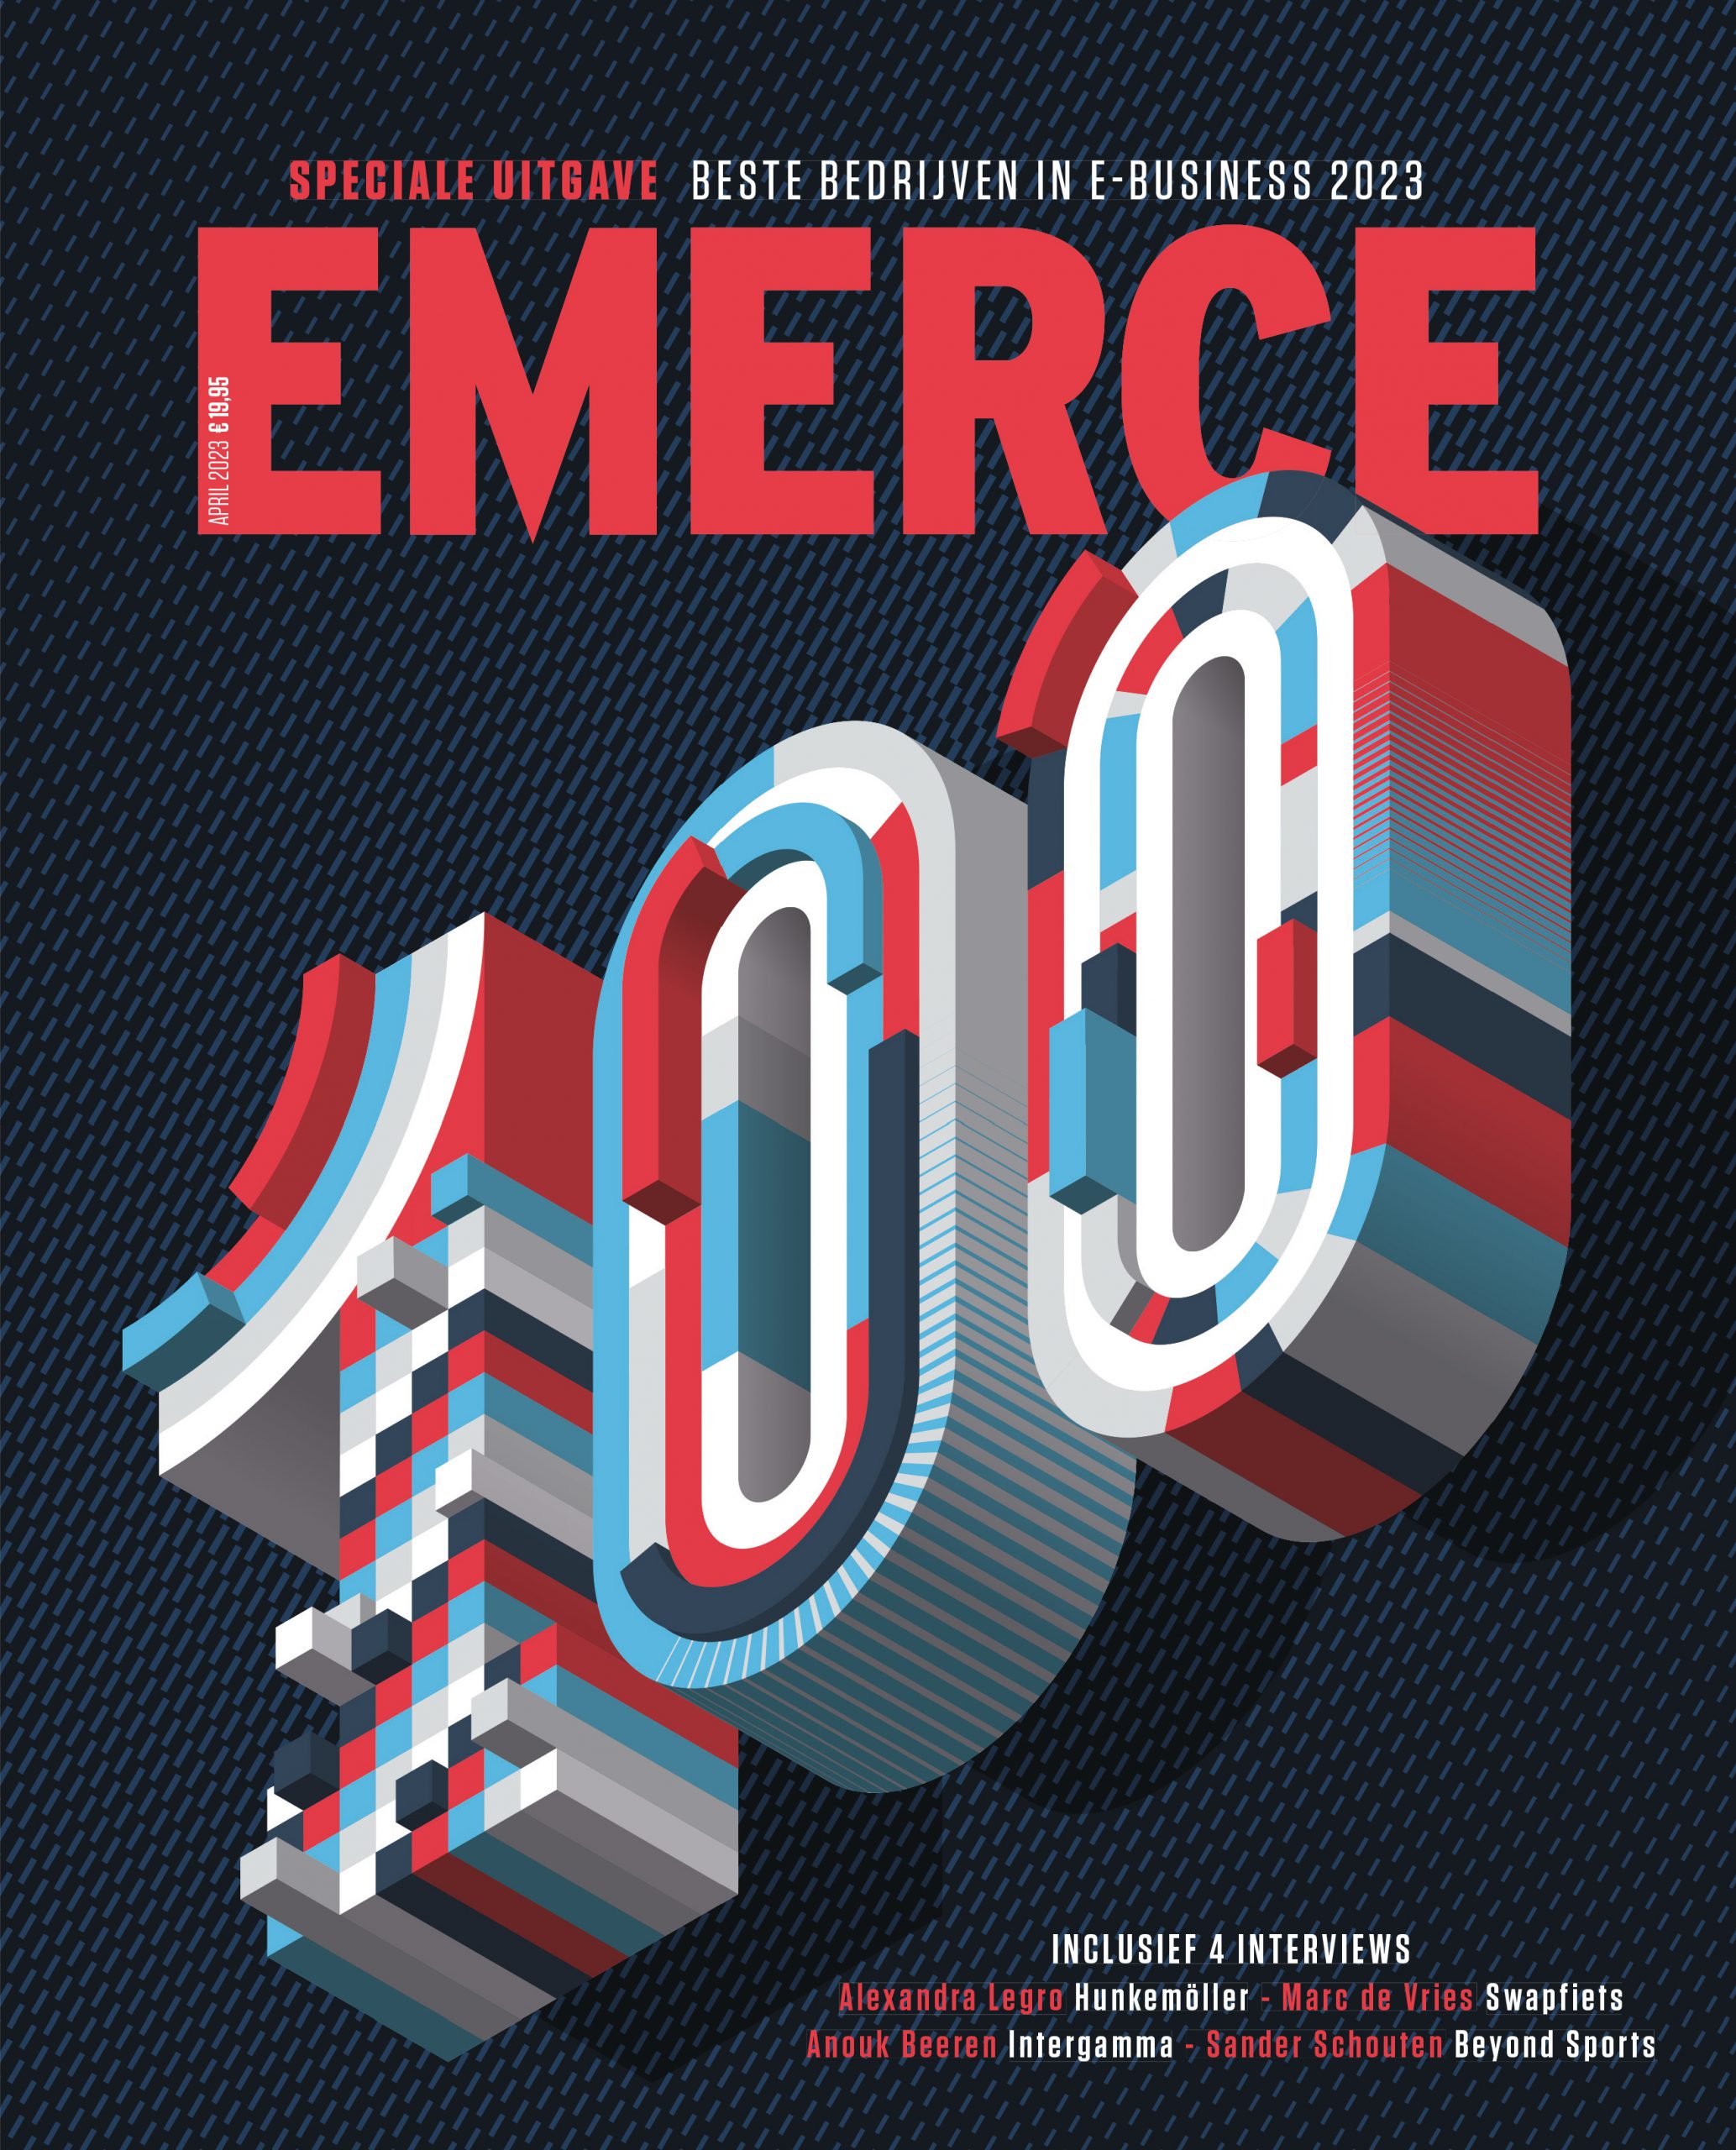 Emerce 100: de beste bedrijven in e-business 2023 - Emerce